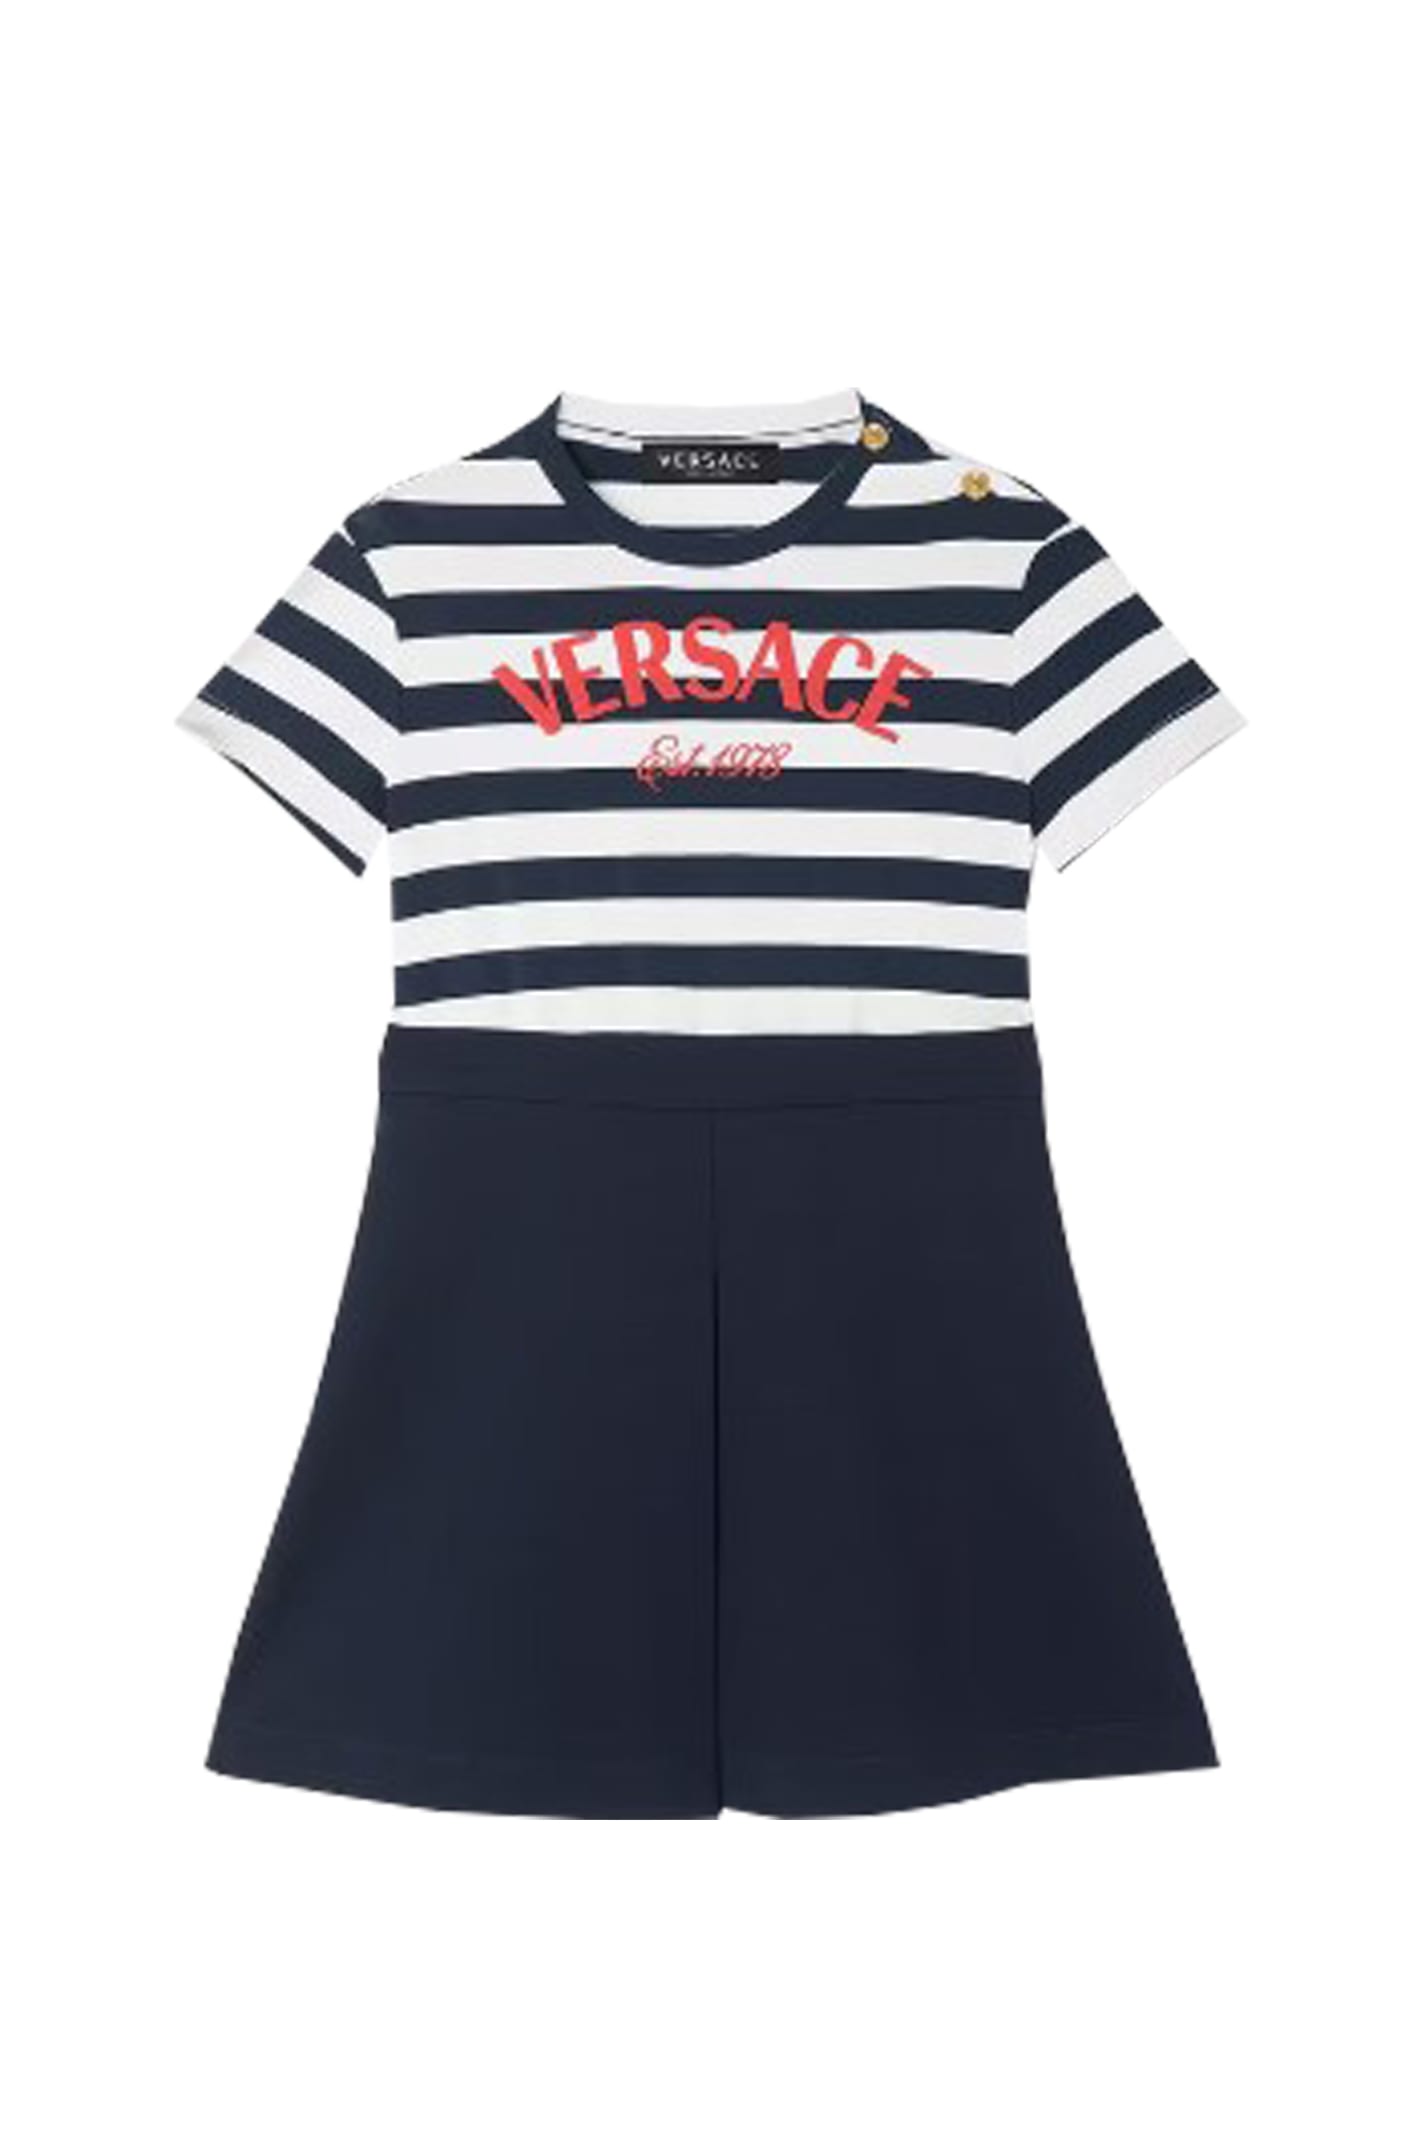 Versace Kids' Nautical Stripe T-shirt Dress In Blue